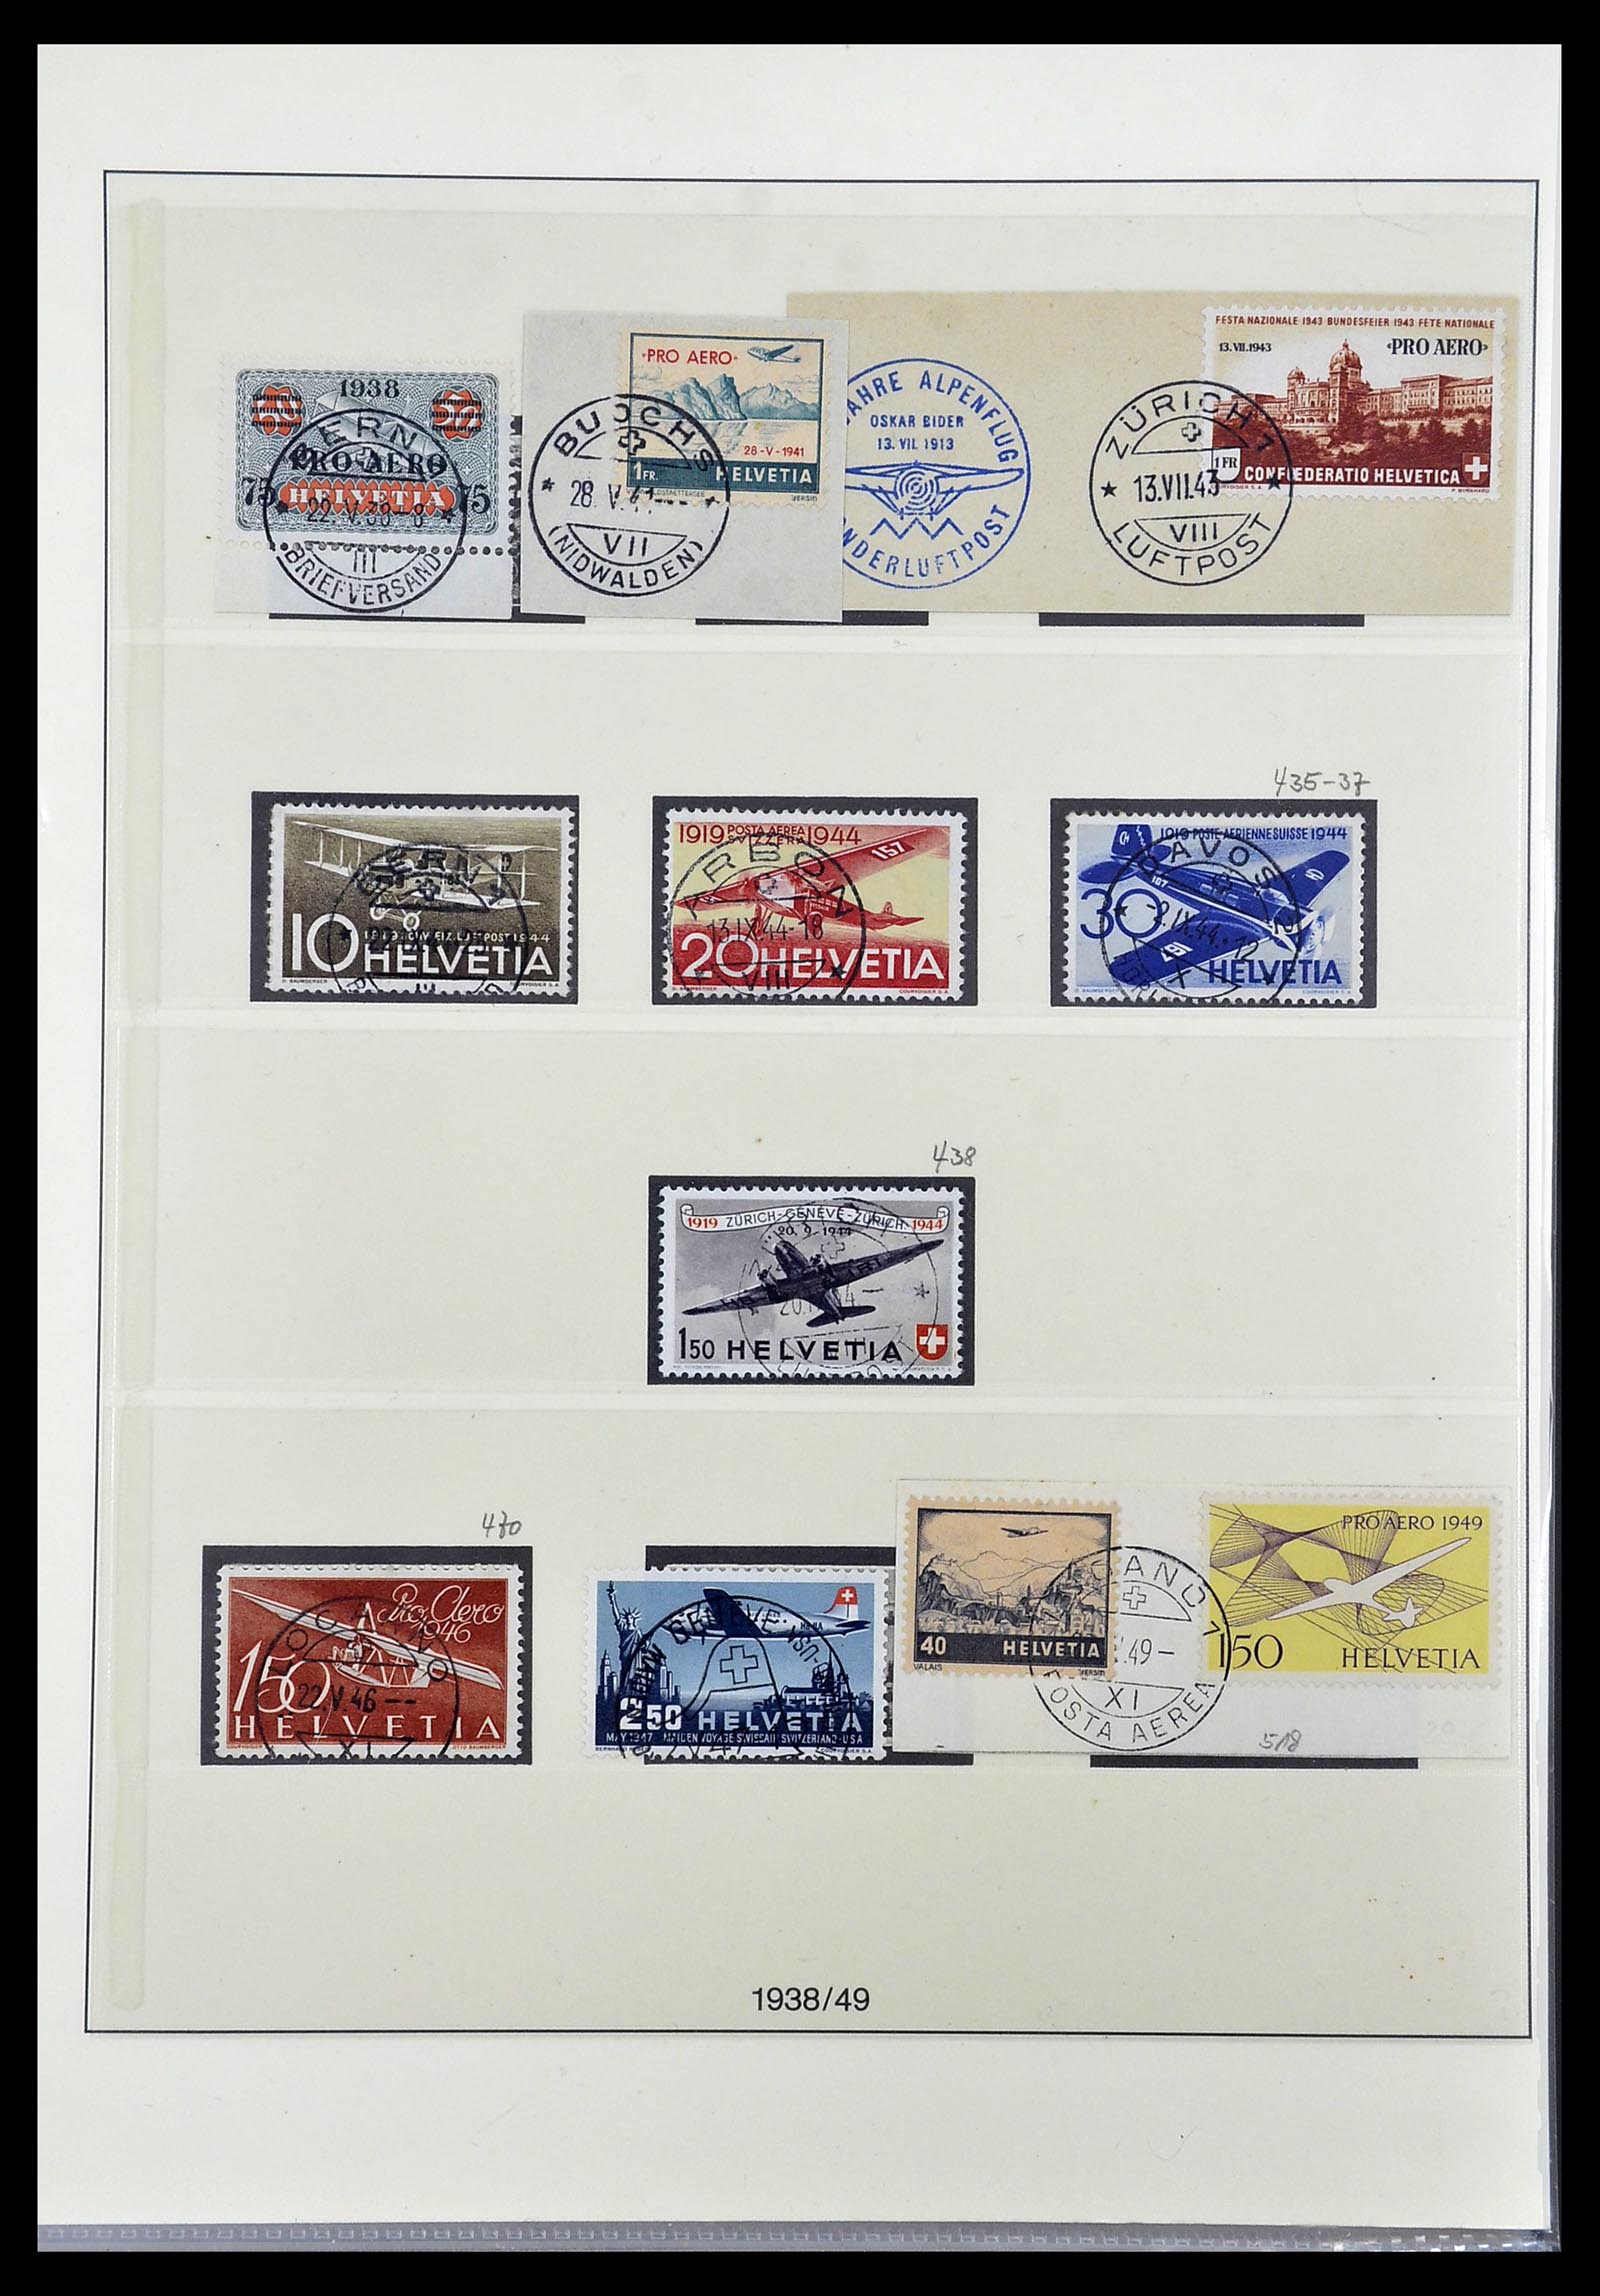 33955 072 - Stamp collection 33955 Switzerland 1850-2009.